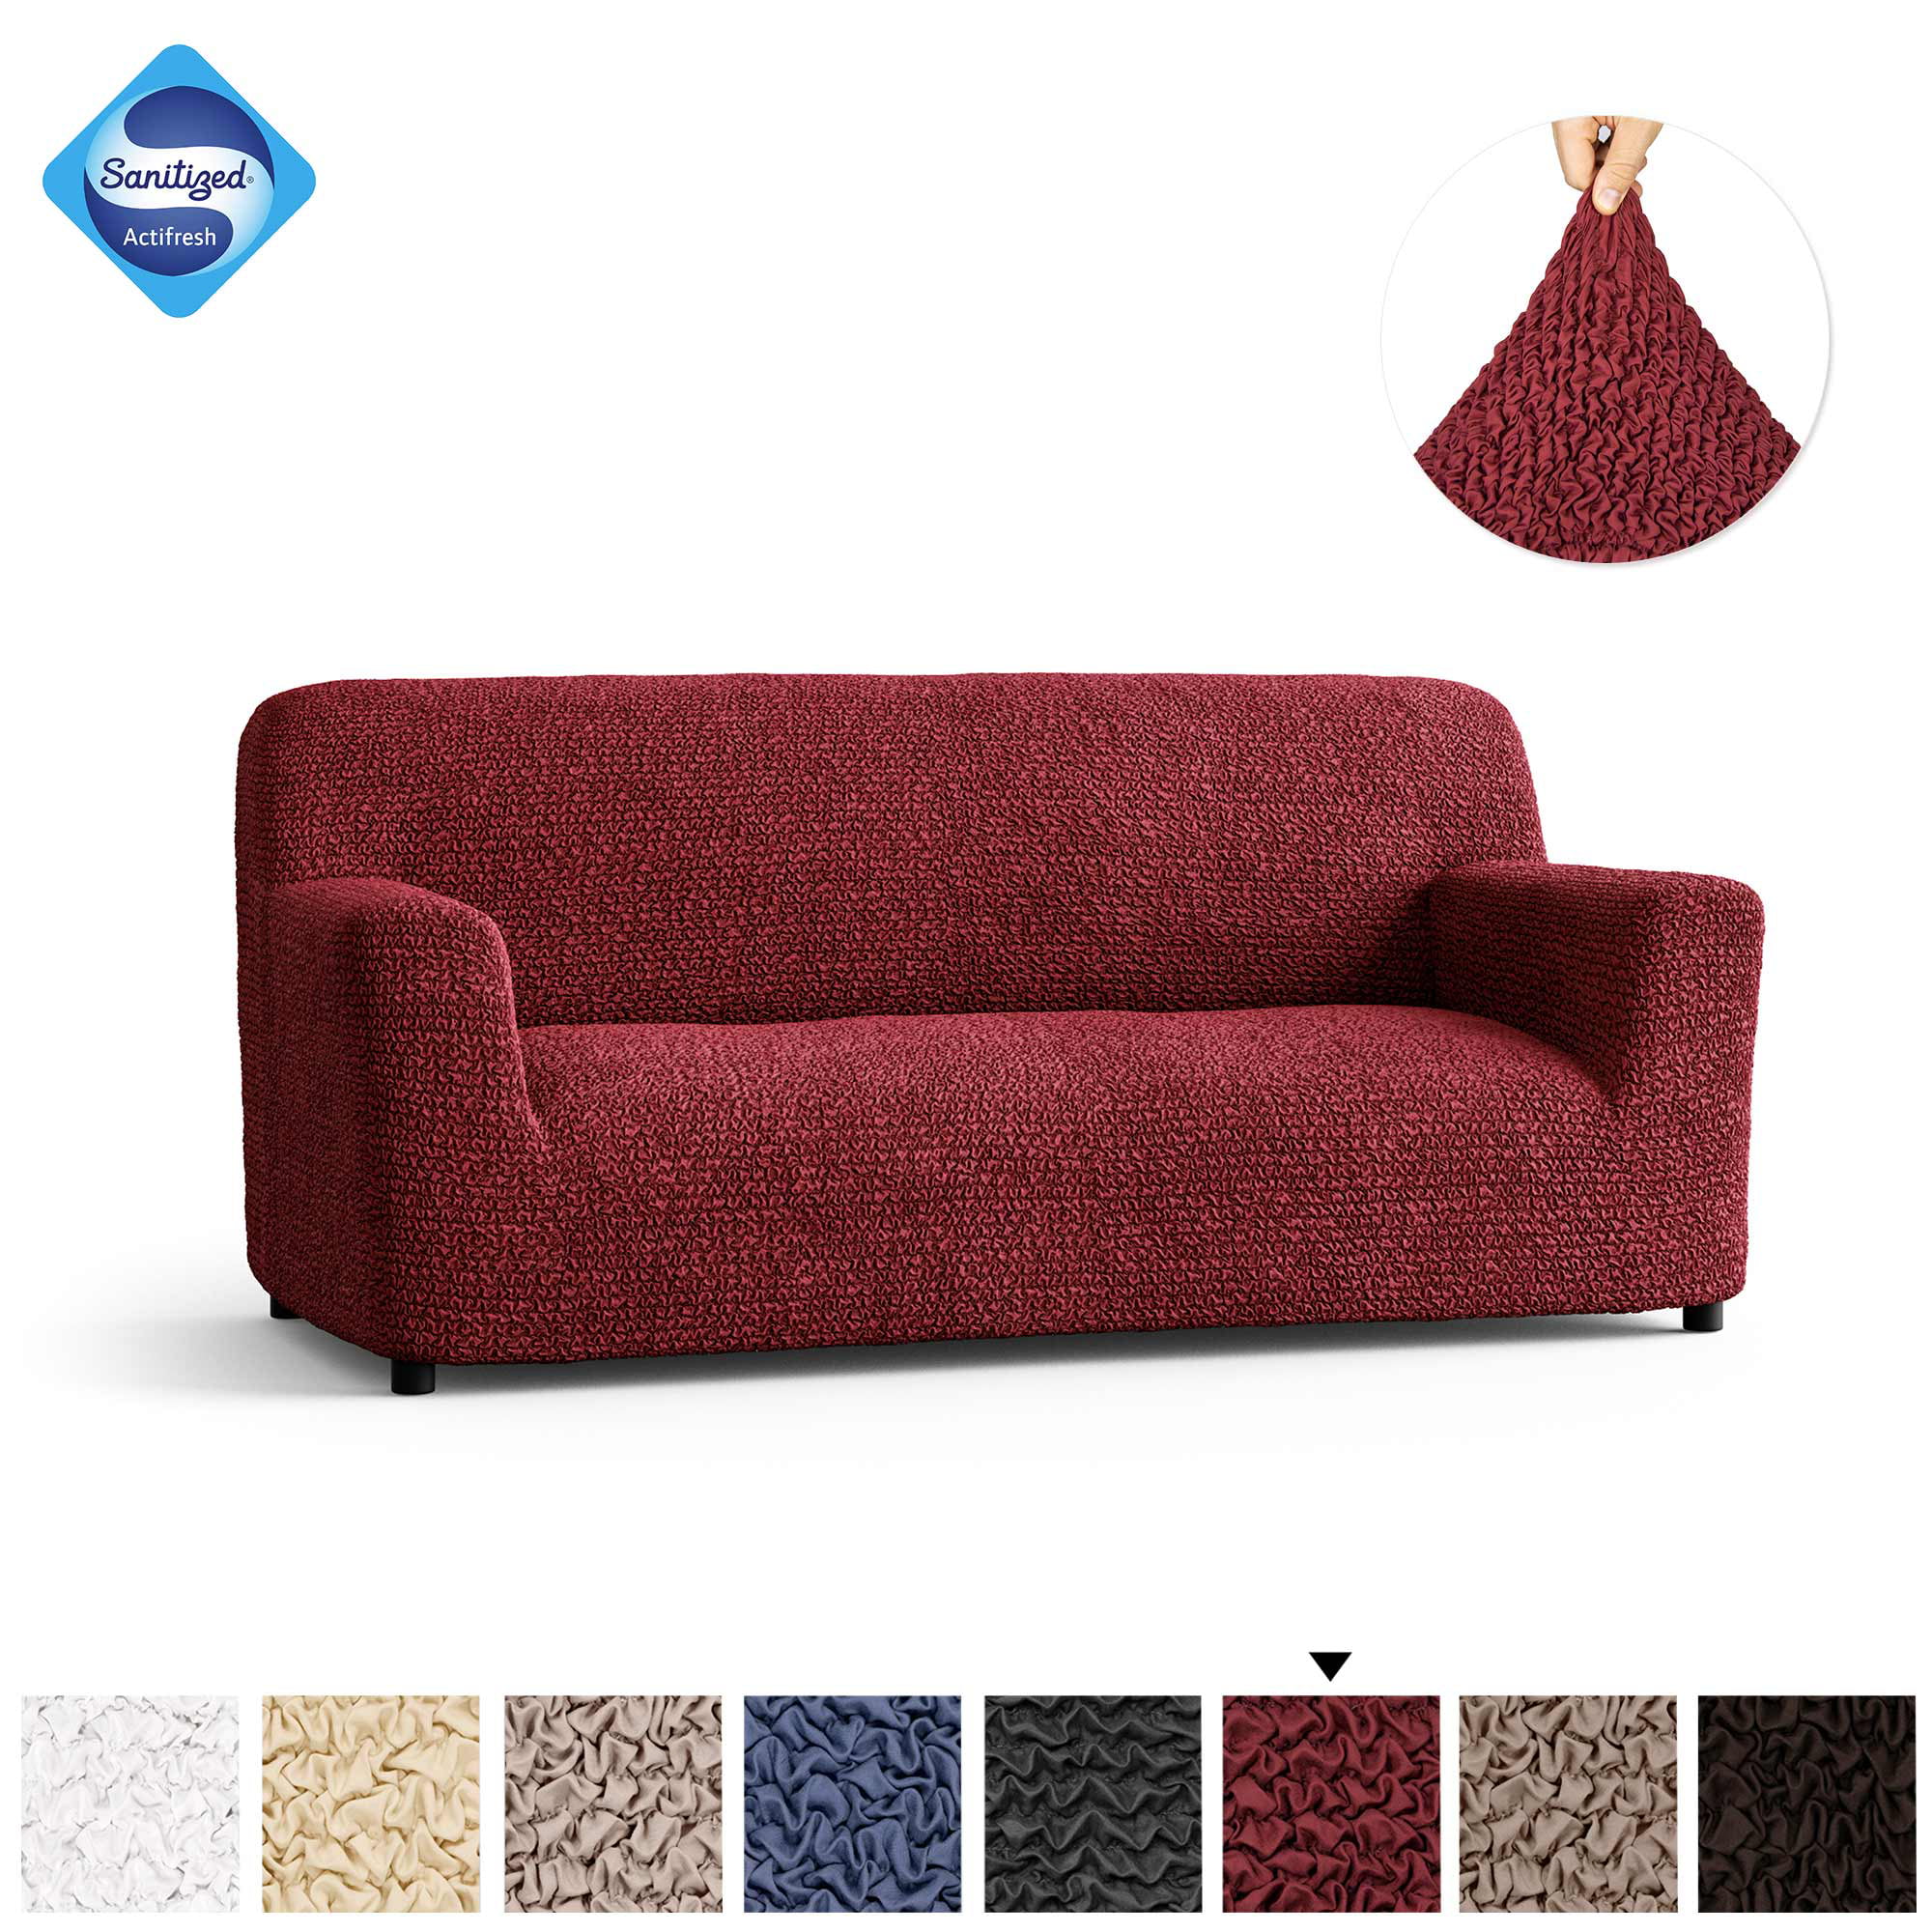 Sofa Cover Furniture Towel Overalls coriletto Cotton Panama Bordeaux 3 measures 